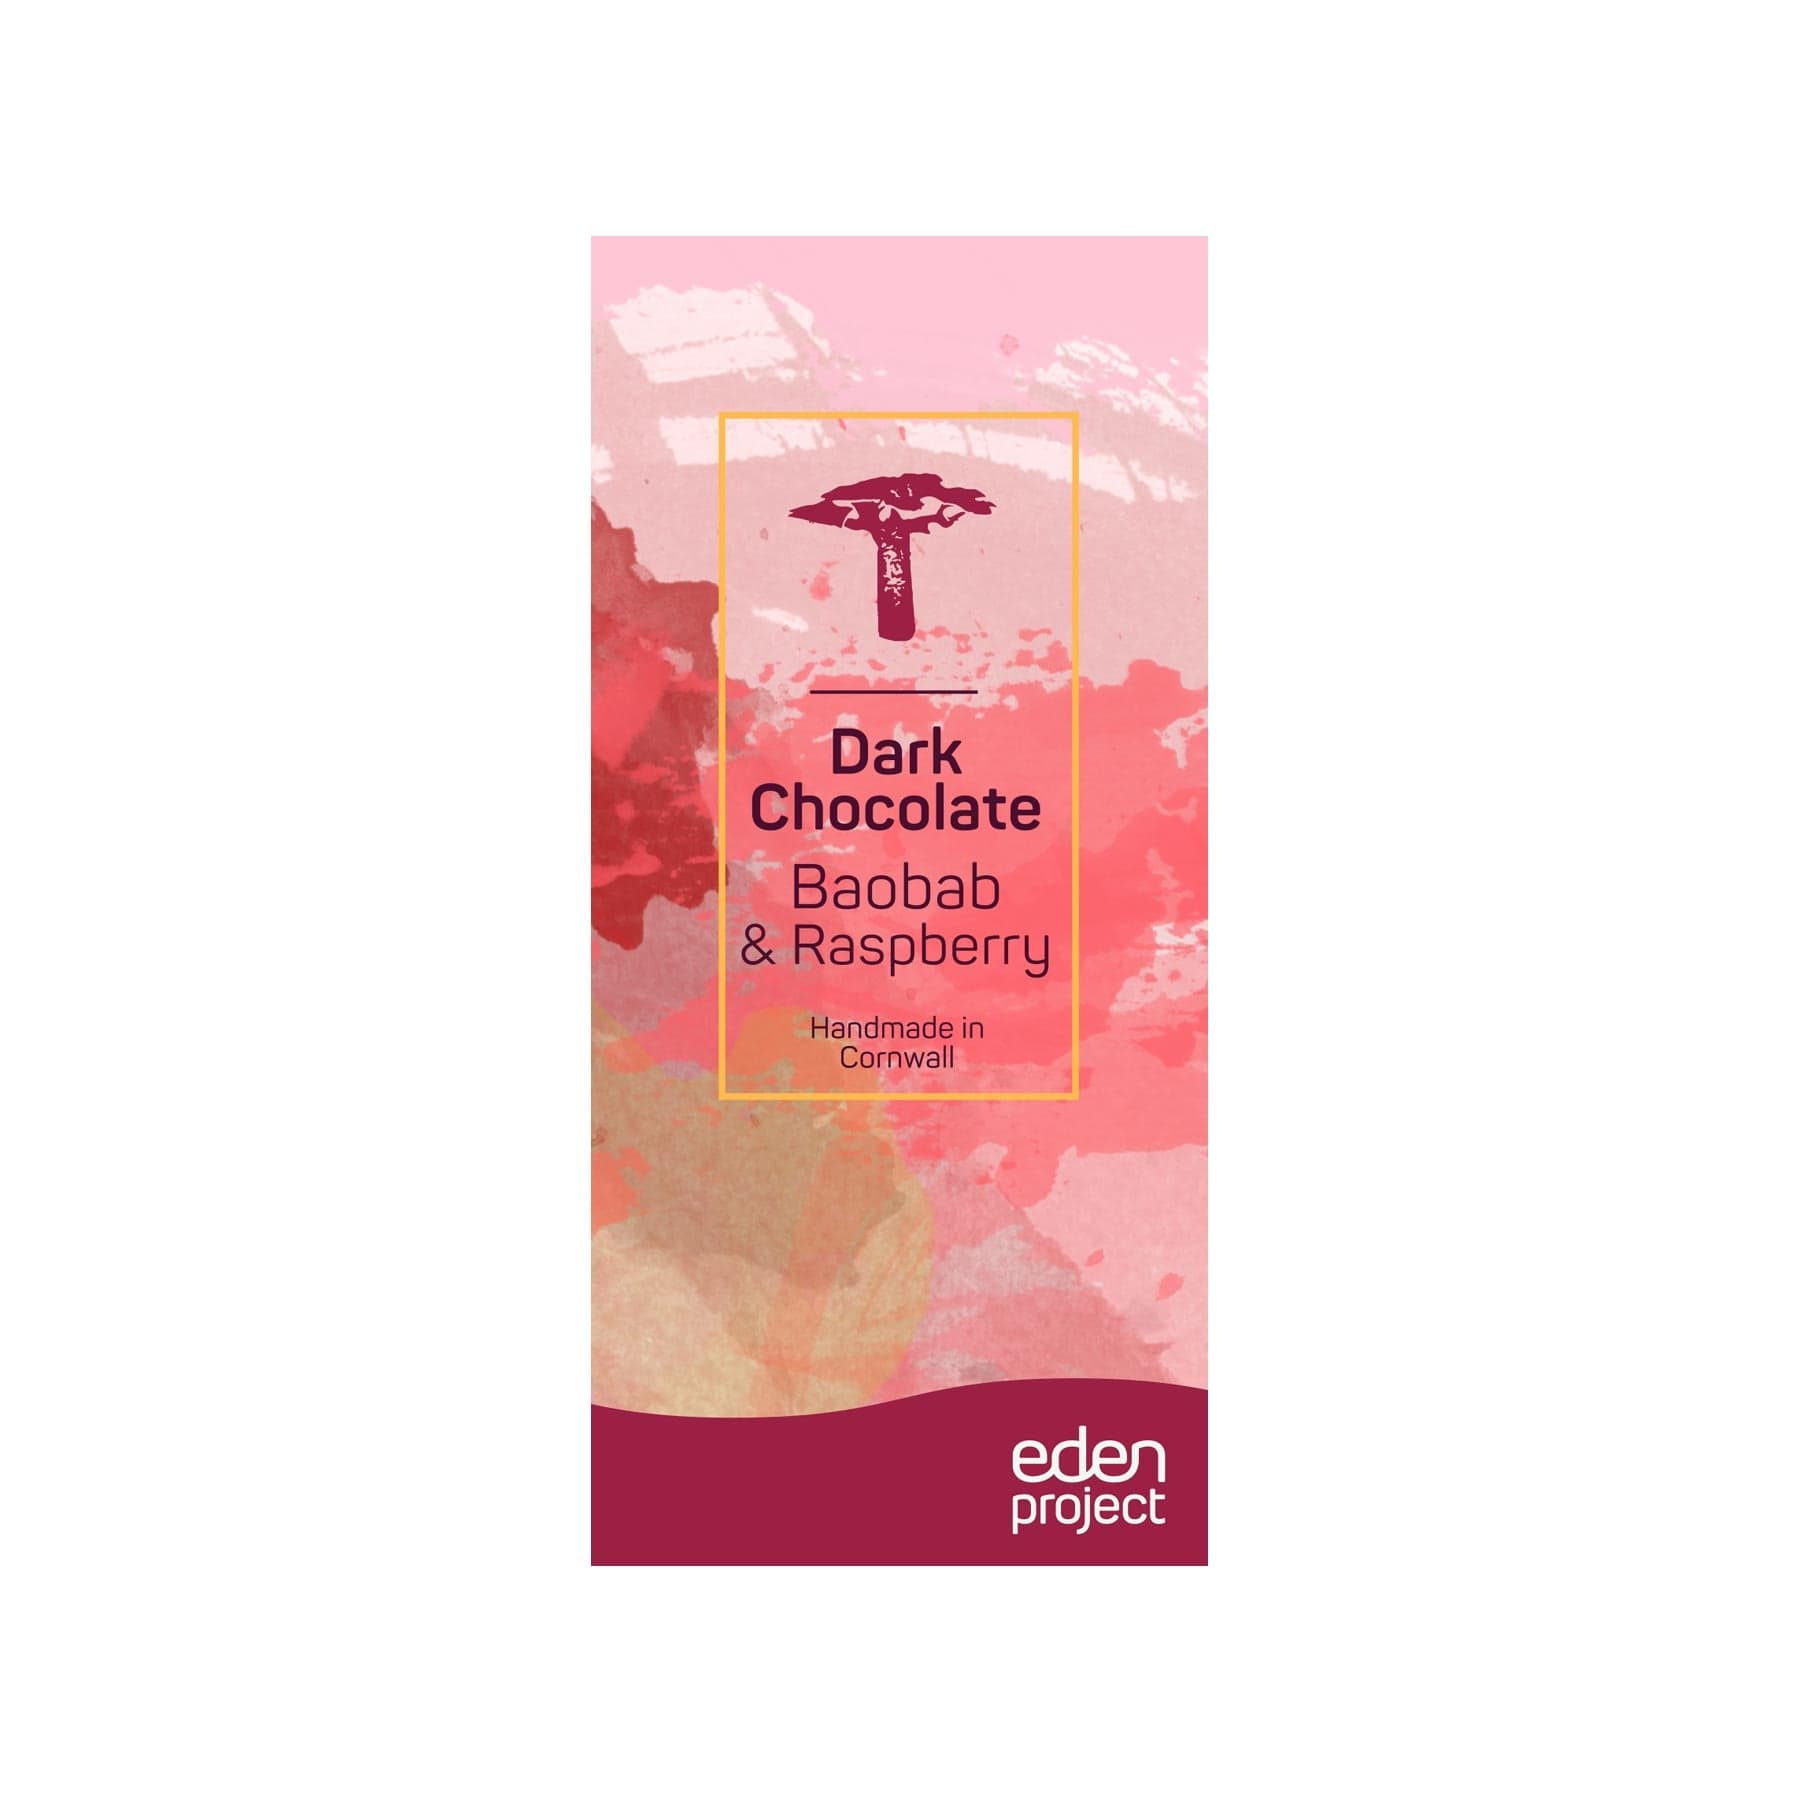 Dark chocolate with baobab & raspberry 100g